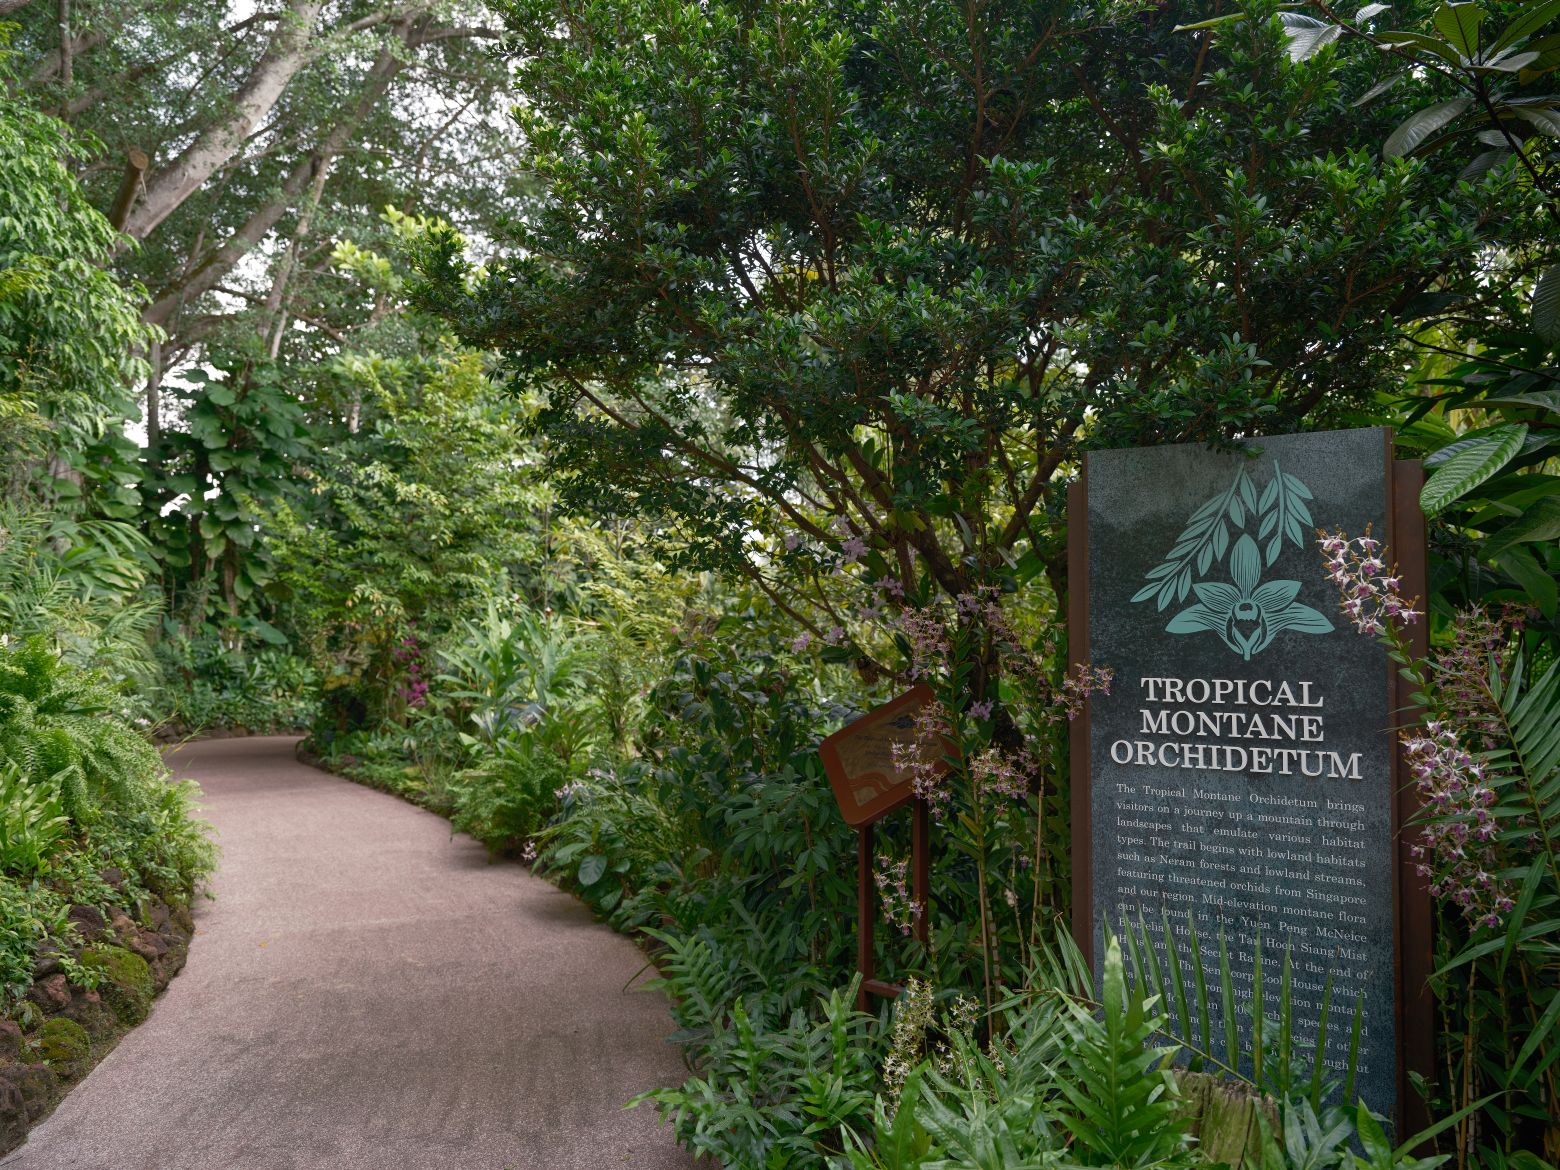 Tropical Montane Orchidetum, National Orchid Garden, Singapore